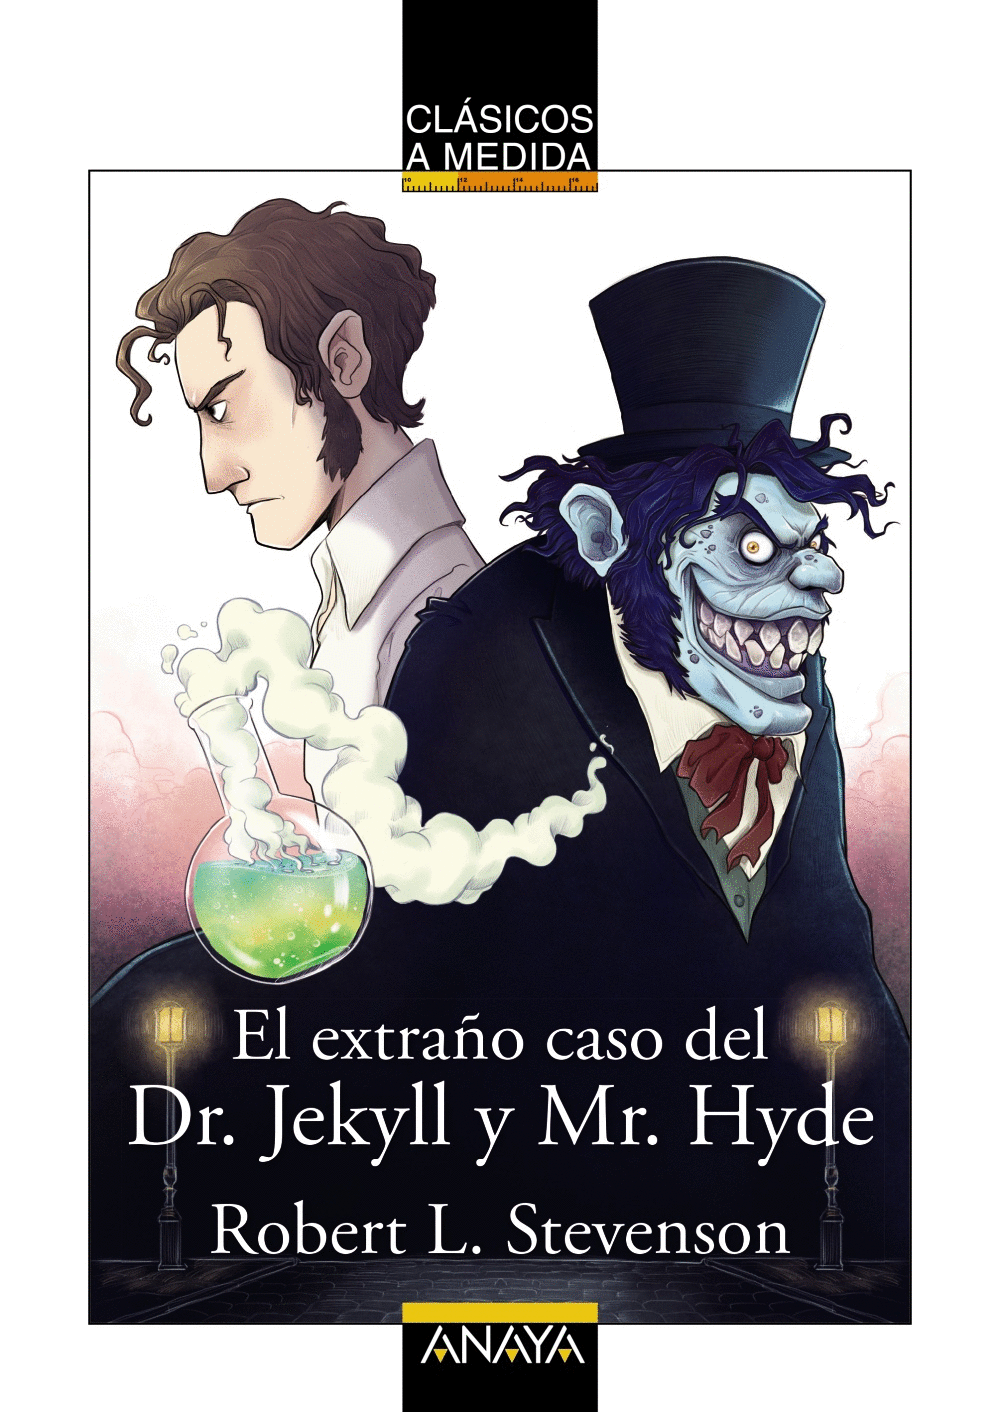 DR. JECKYLL